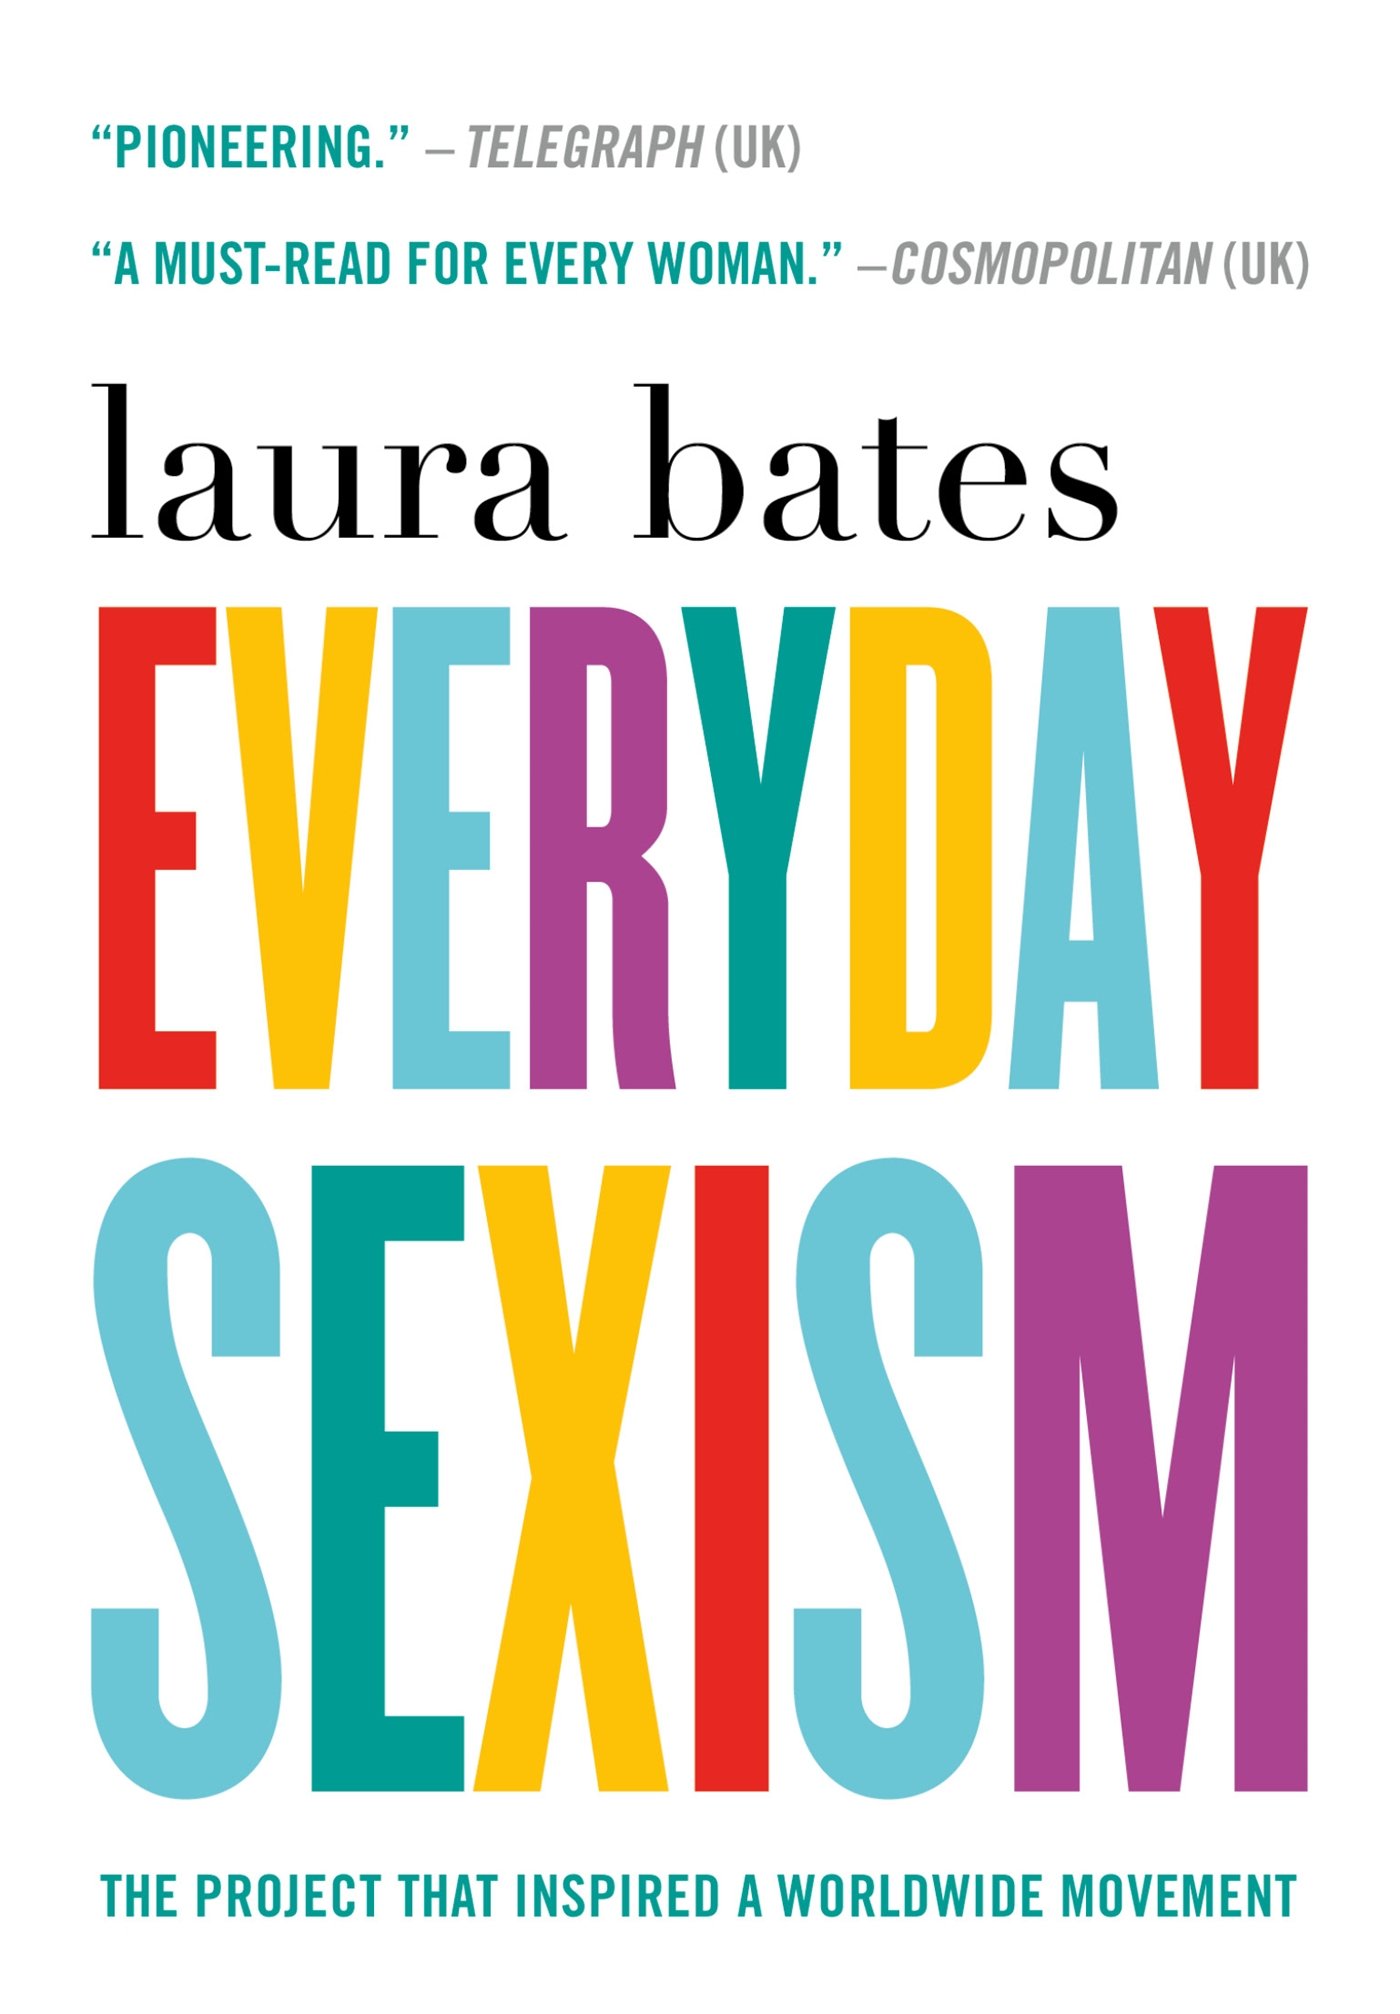 Everyday Sexism, Laura Bates